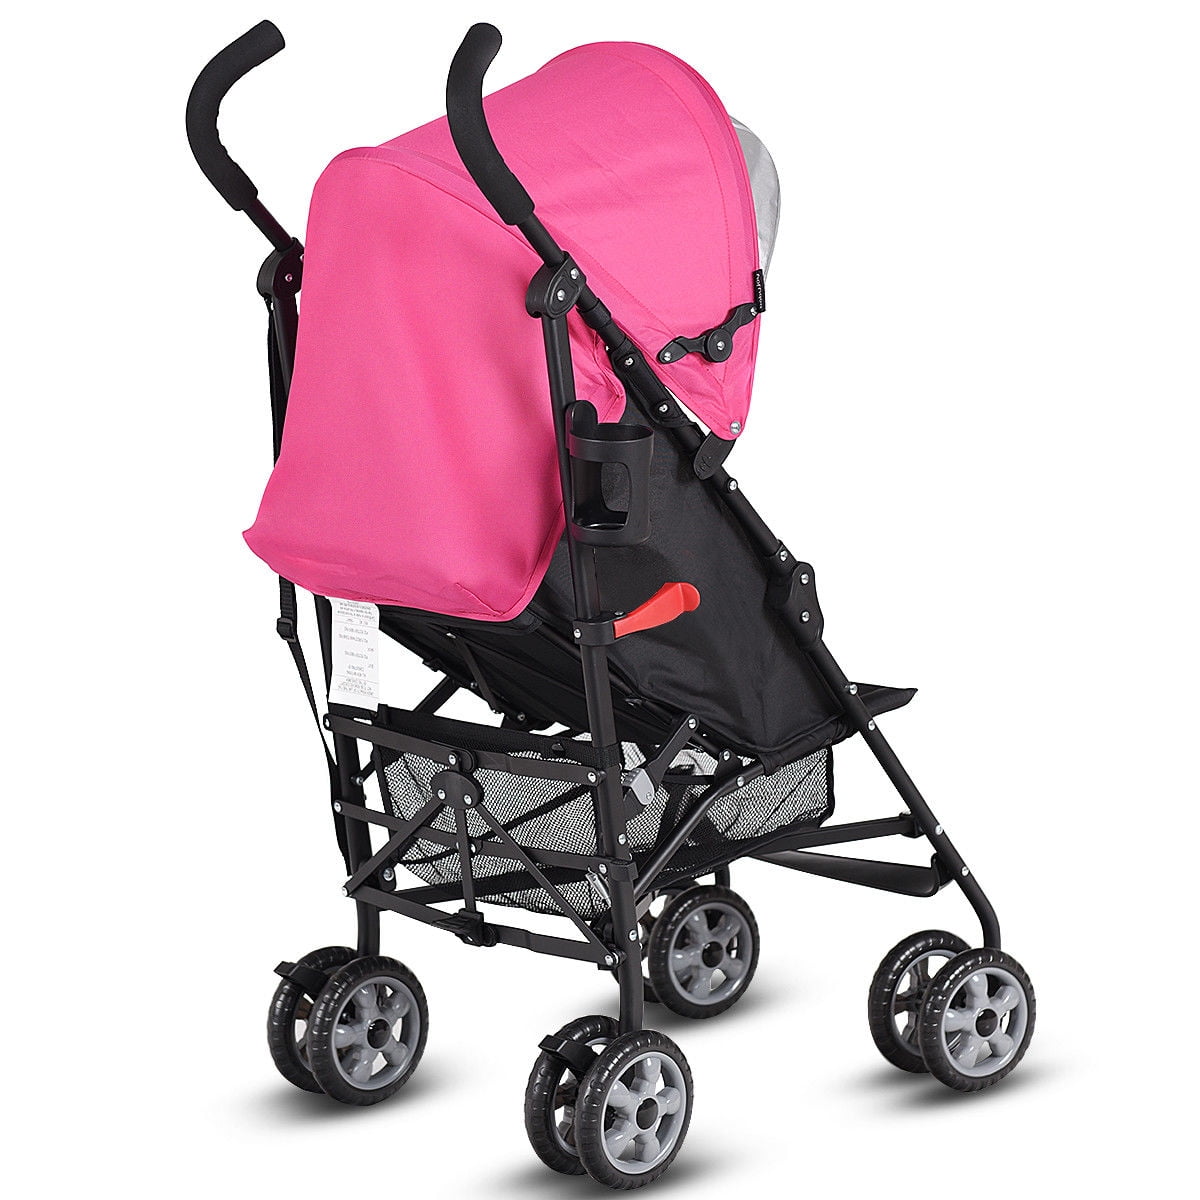 Folding Lightweight Baby Toddler Umbrella Travel Stroller w/ Storage Basket New 